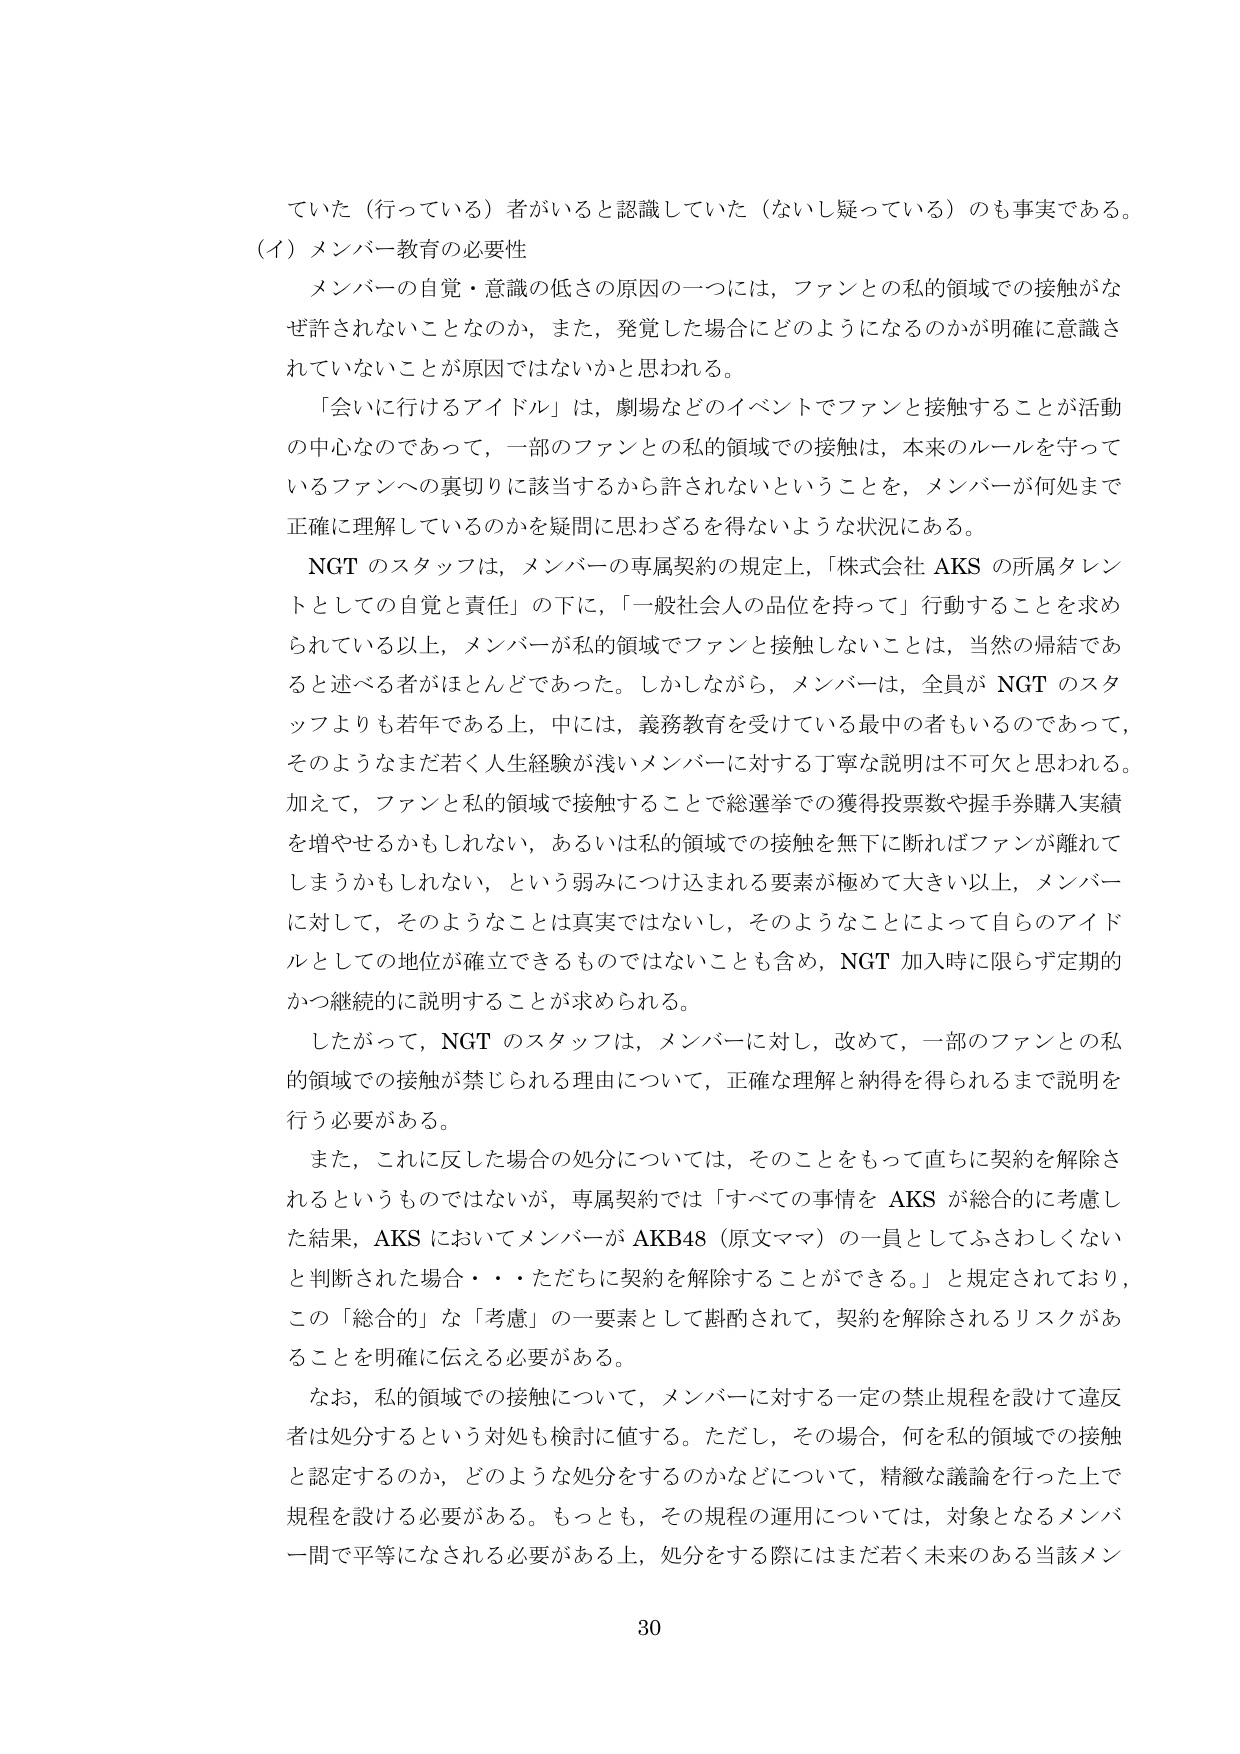 NGT48第三者委員会調査報告書32